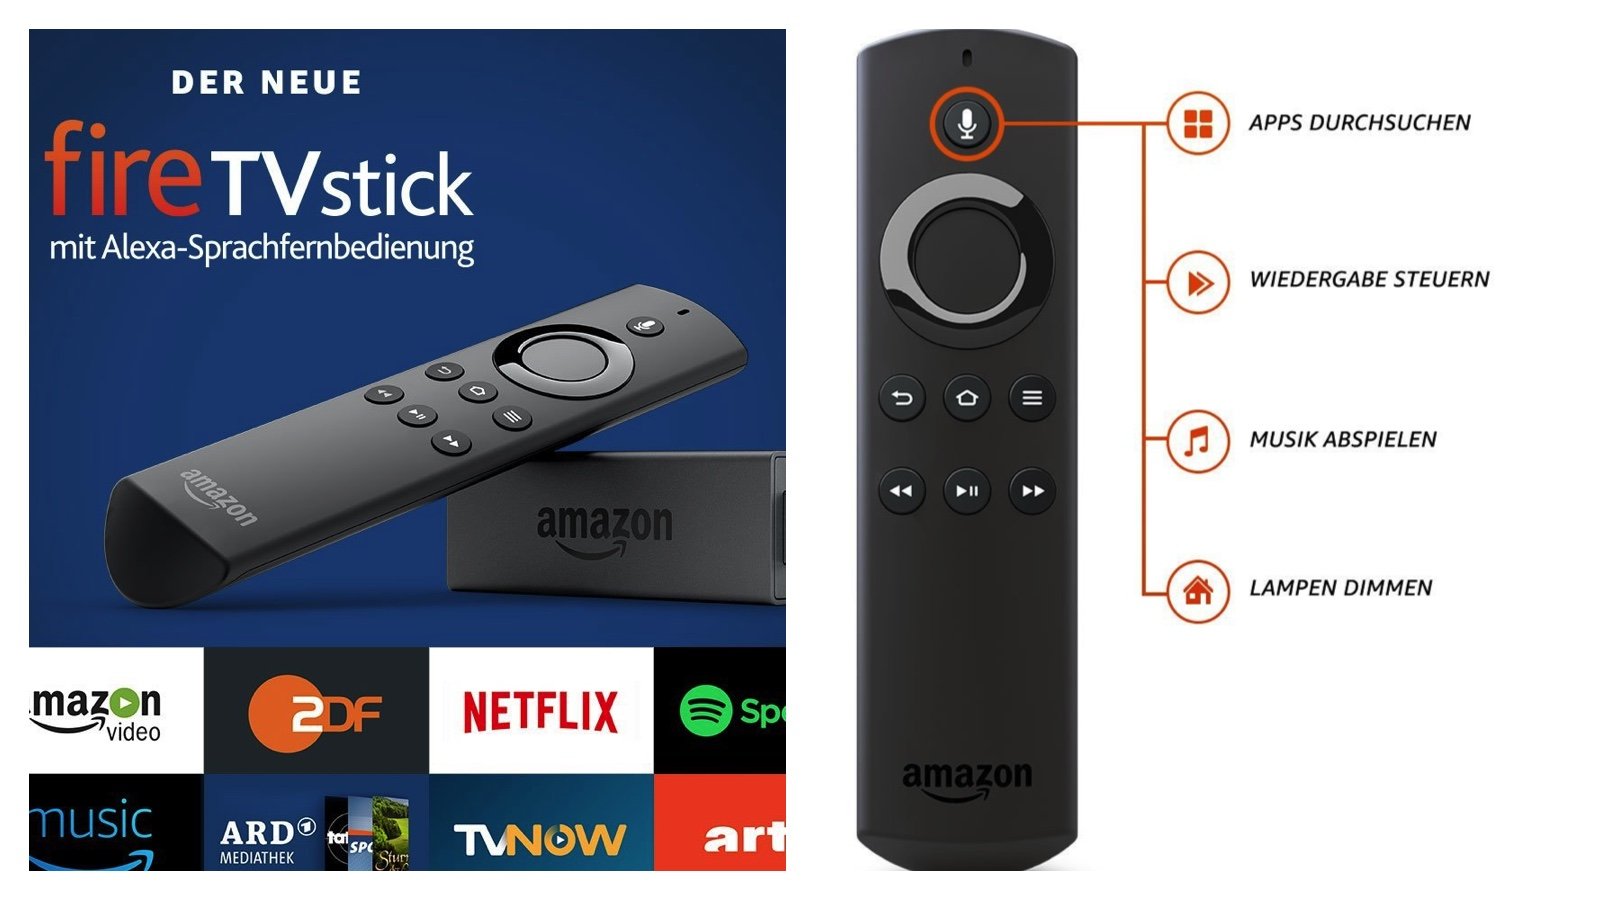 Neu bei Euronics: Amazon Fire TV Stick mit Alexa